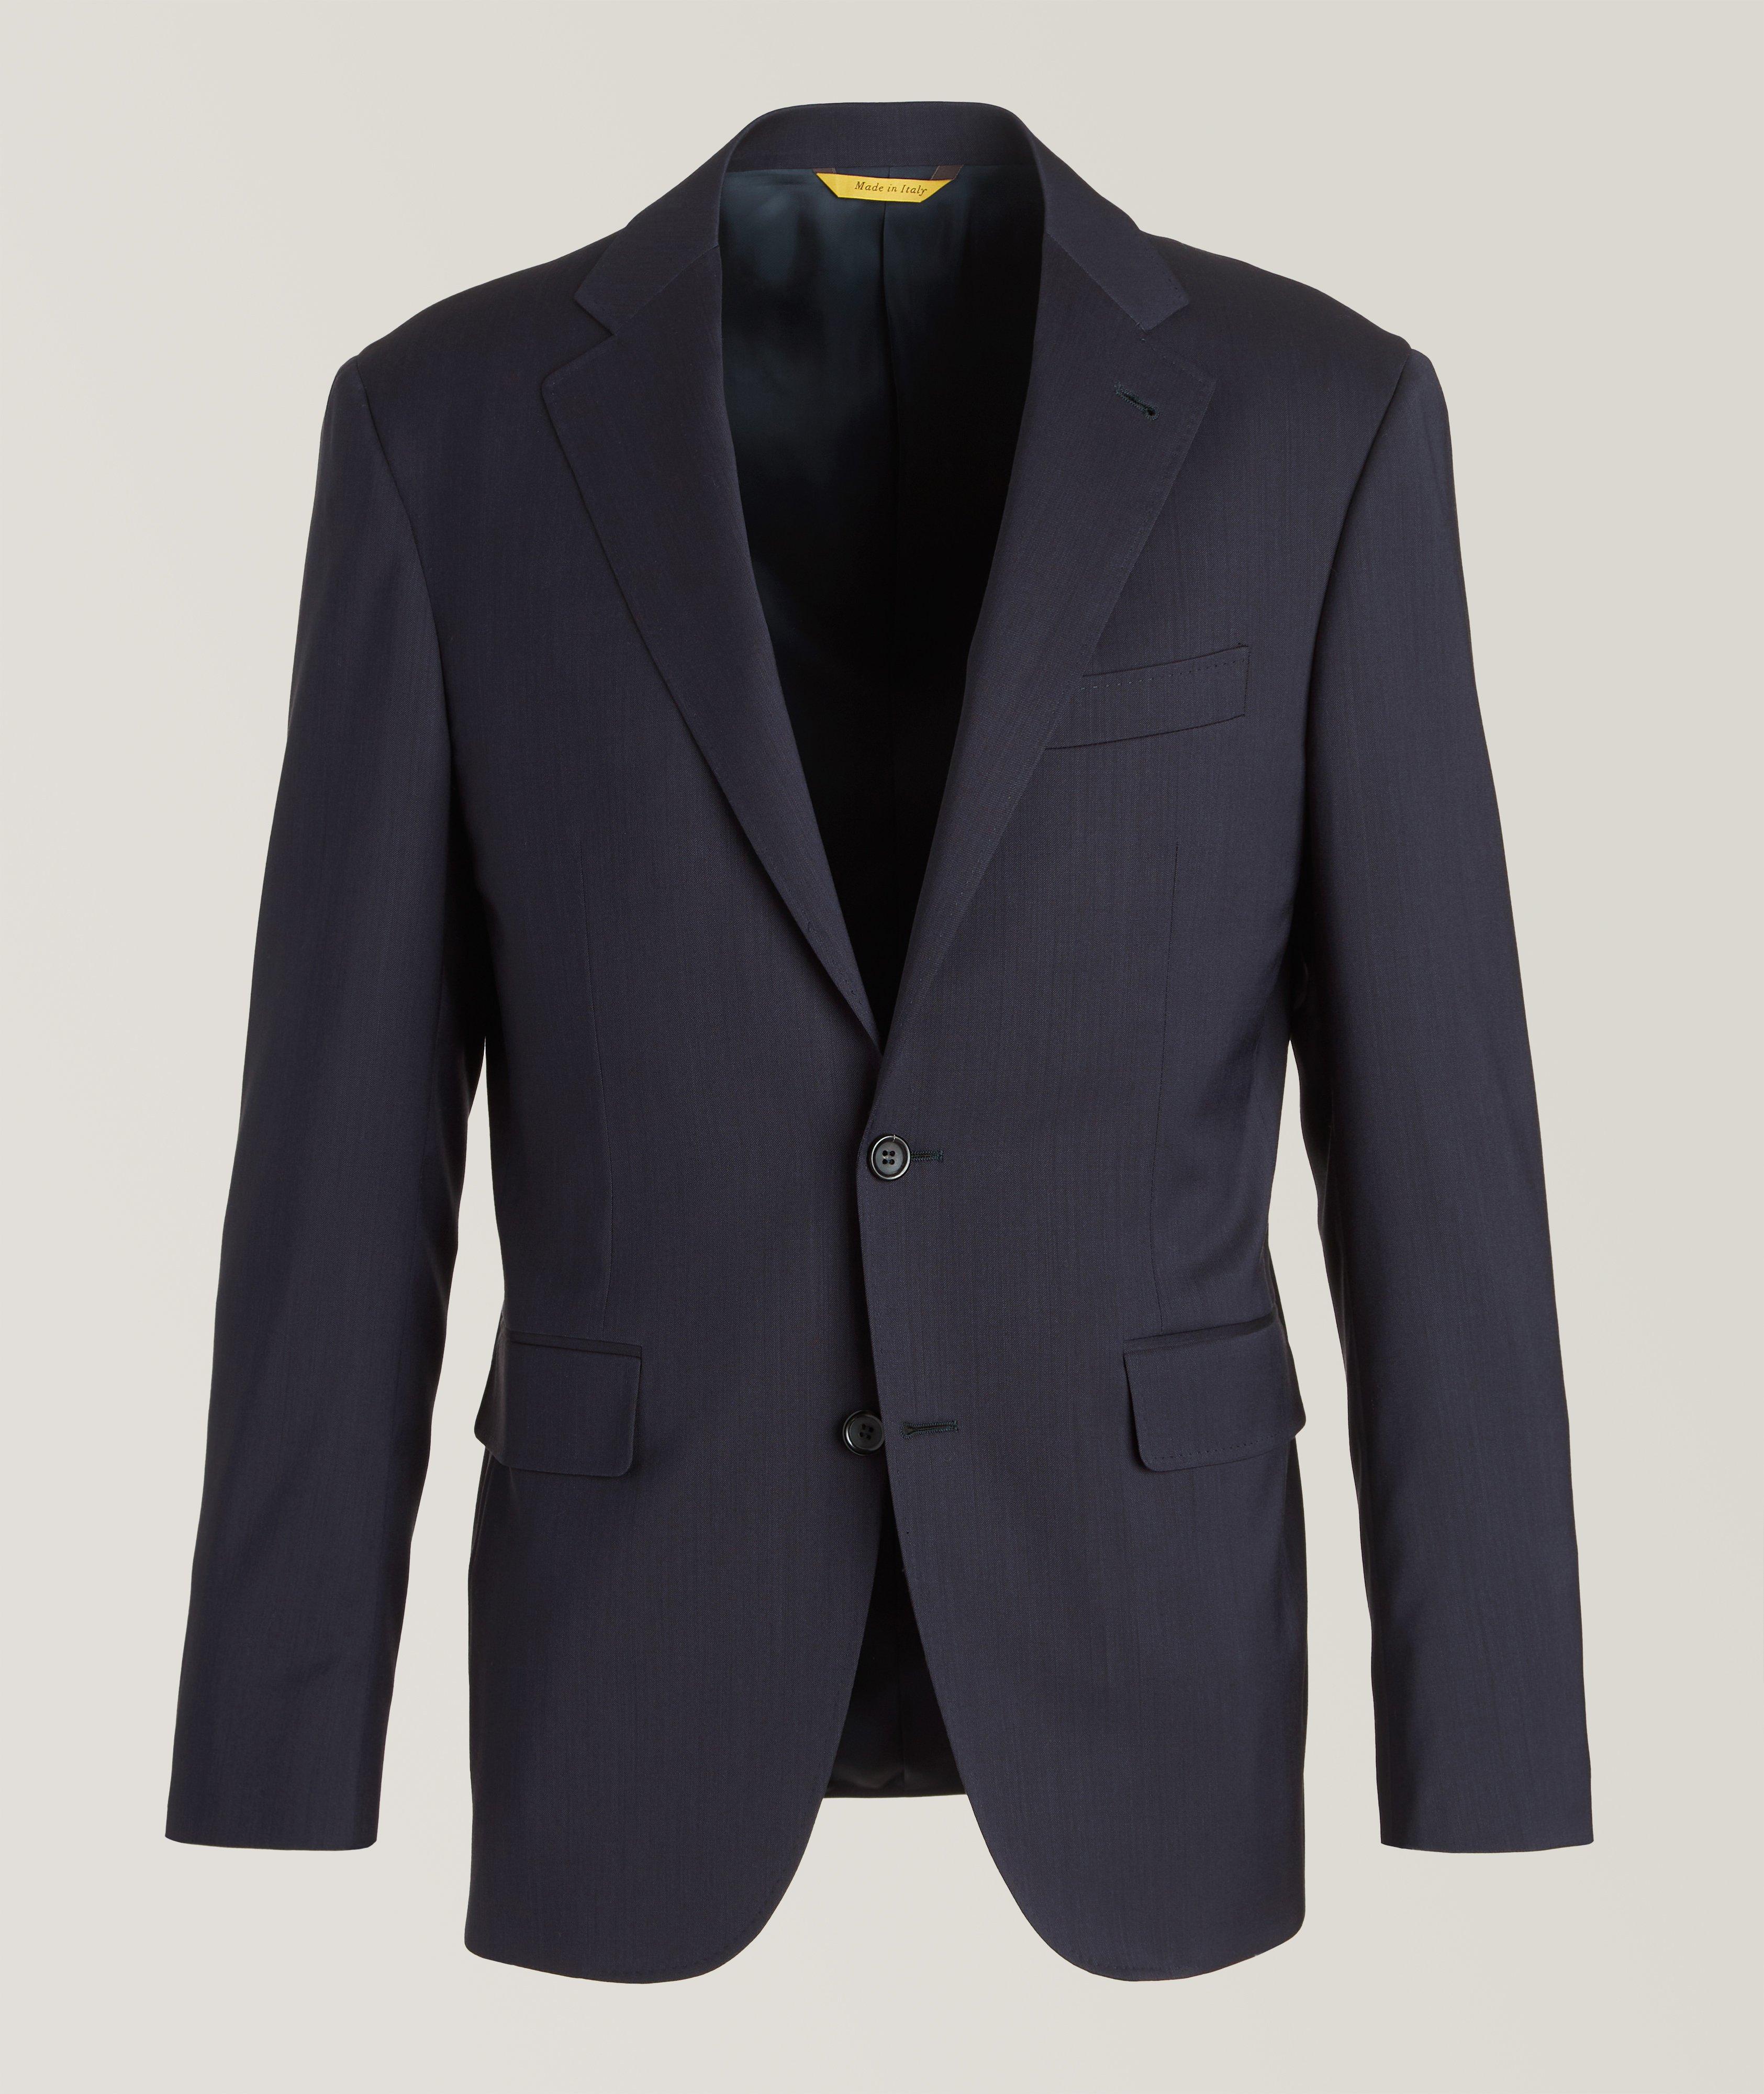 Kei Wool Solid Textured Suit image 0